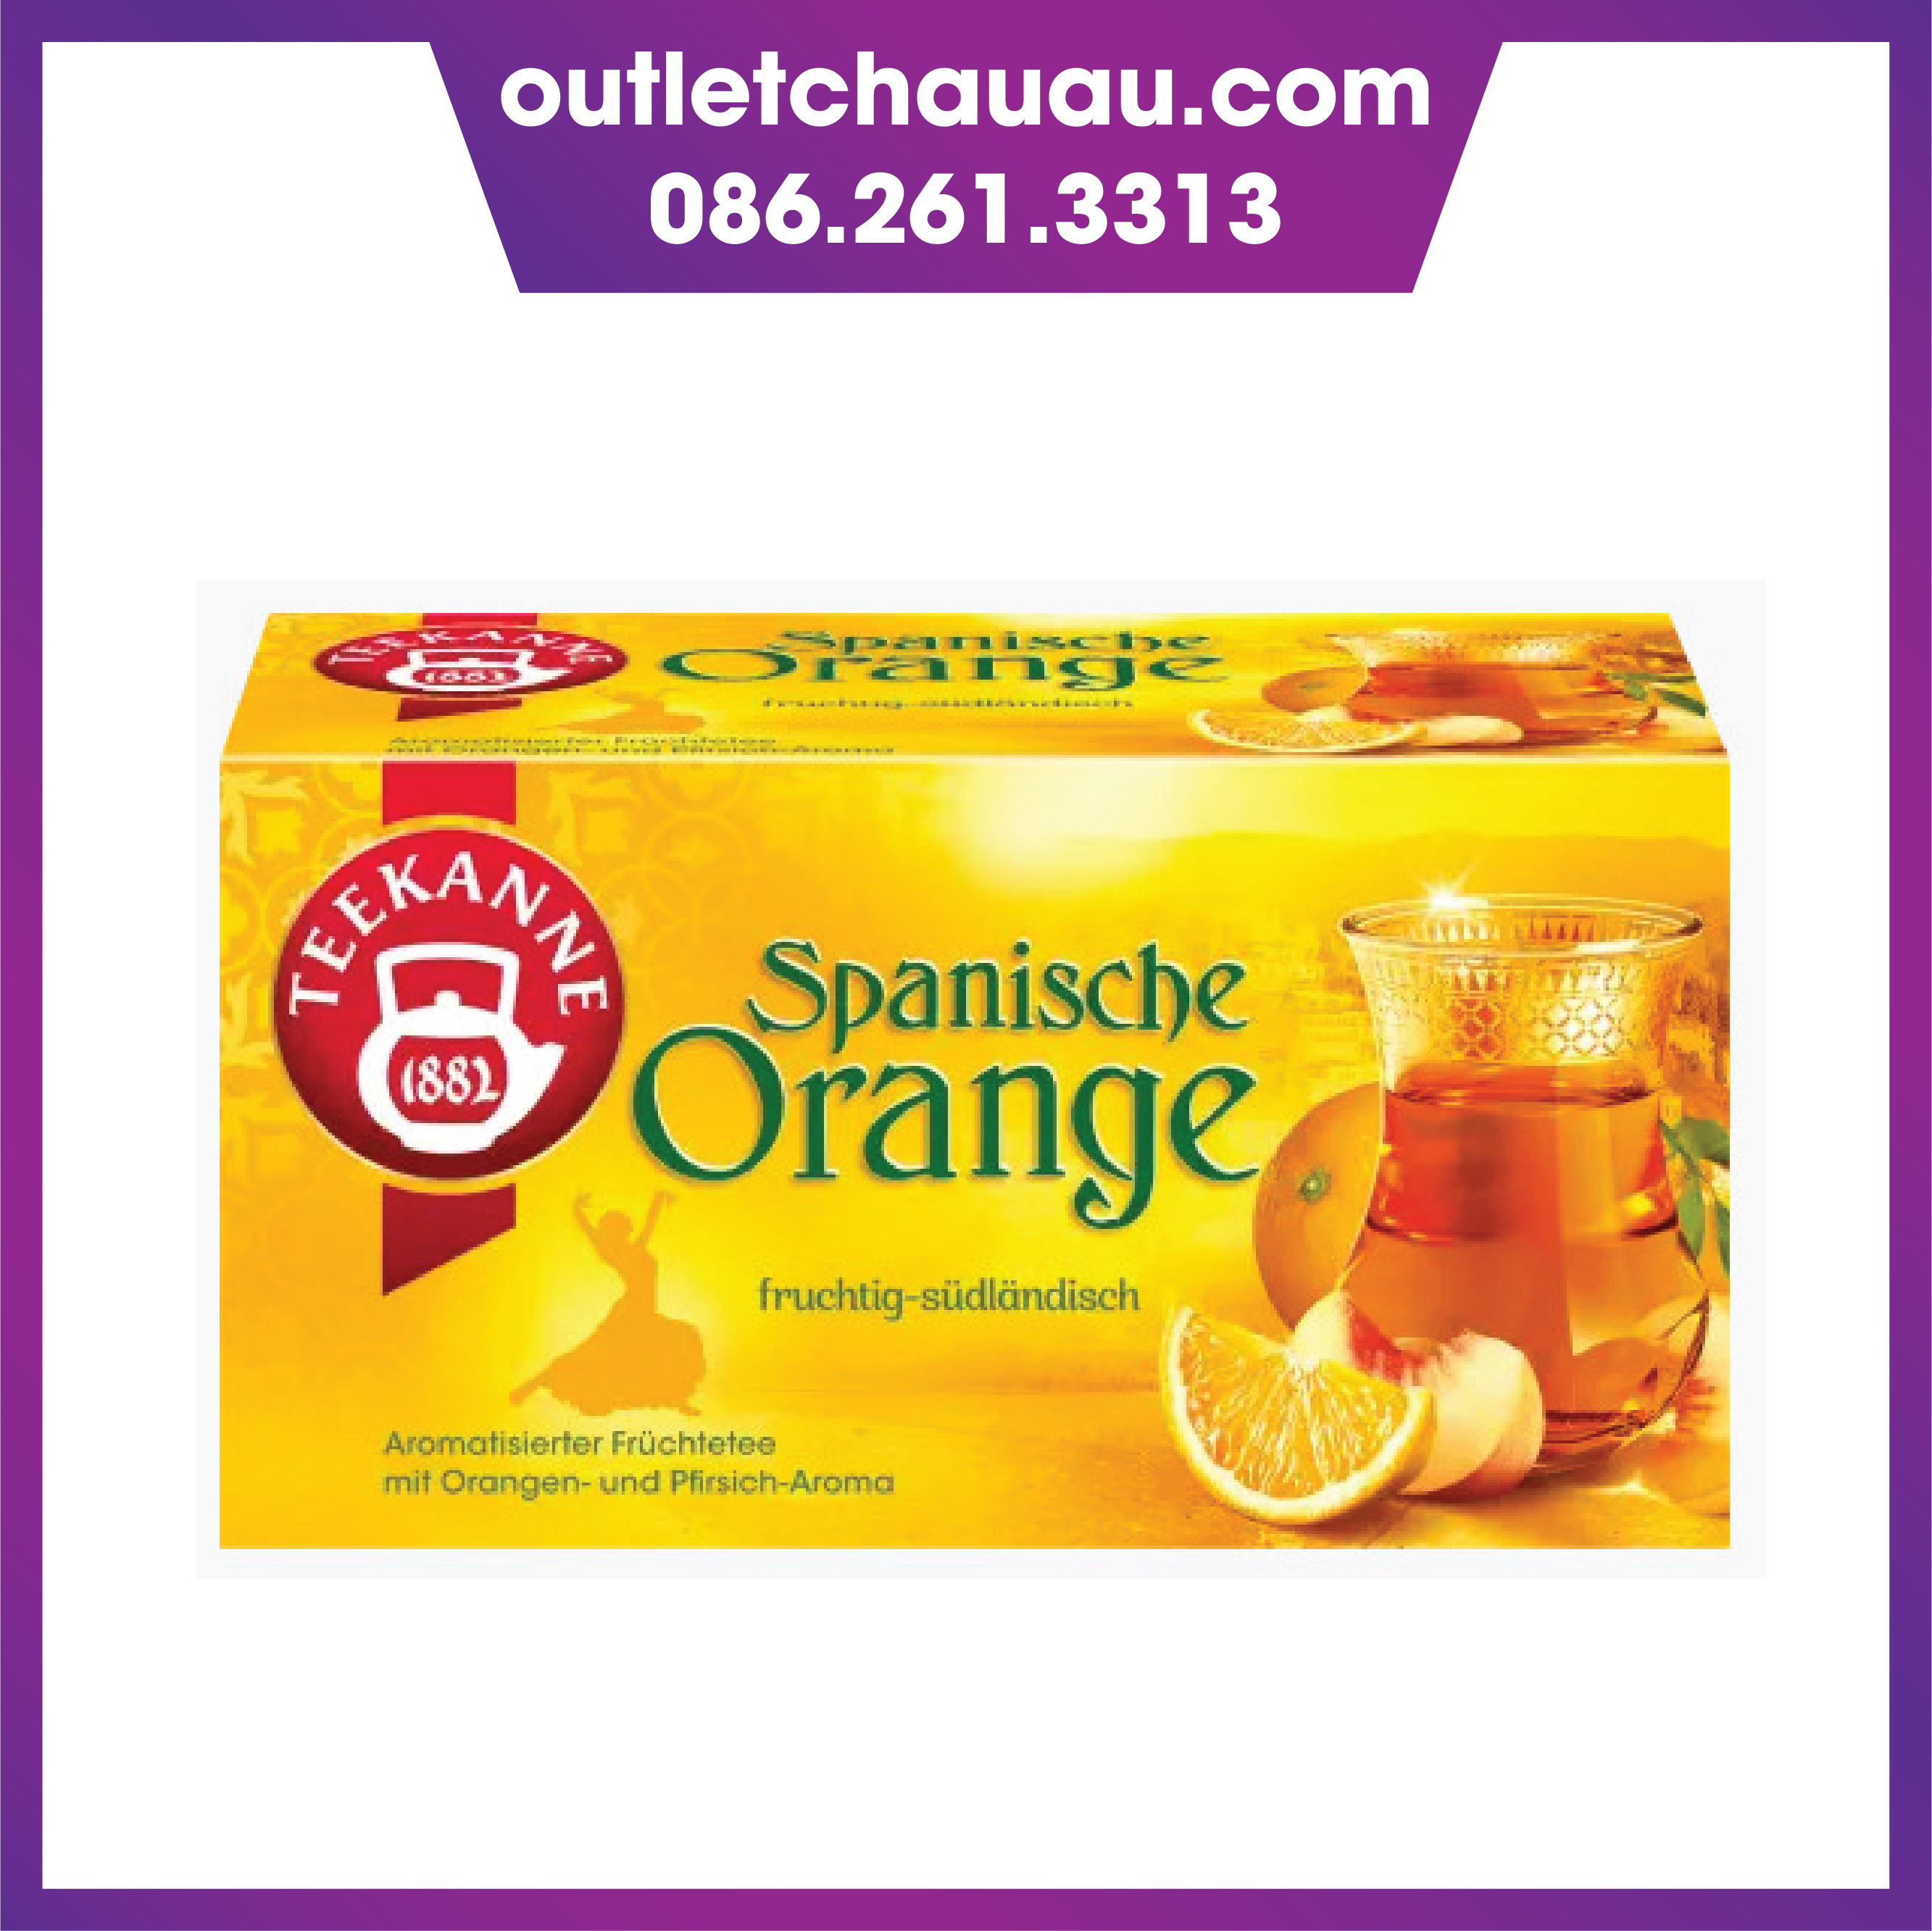 TRÀ TEEKANNE QUẾ CAM TÂY BAN NHA 50G TEEKANNE 1882 Spanish Orange Tea